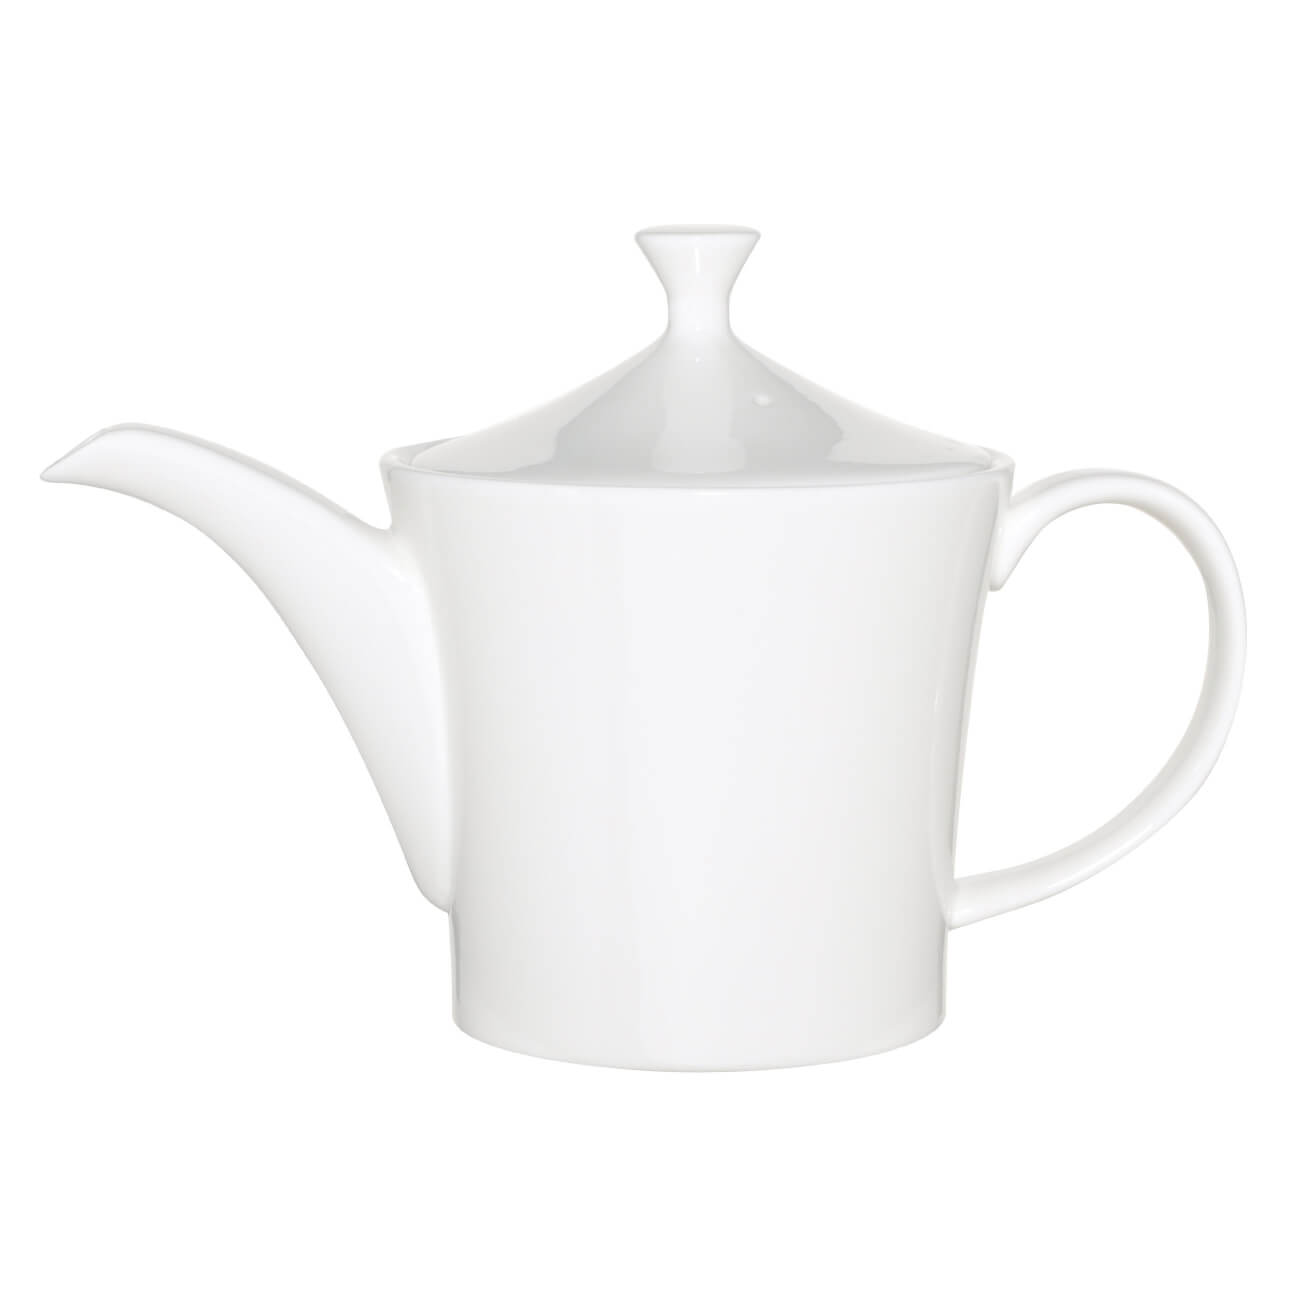 Чайник заварочный, 800 мл, фарфор F, белый, Ideal white чайник заварочный 0 75 л